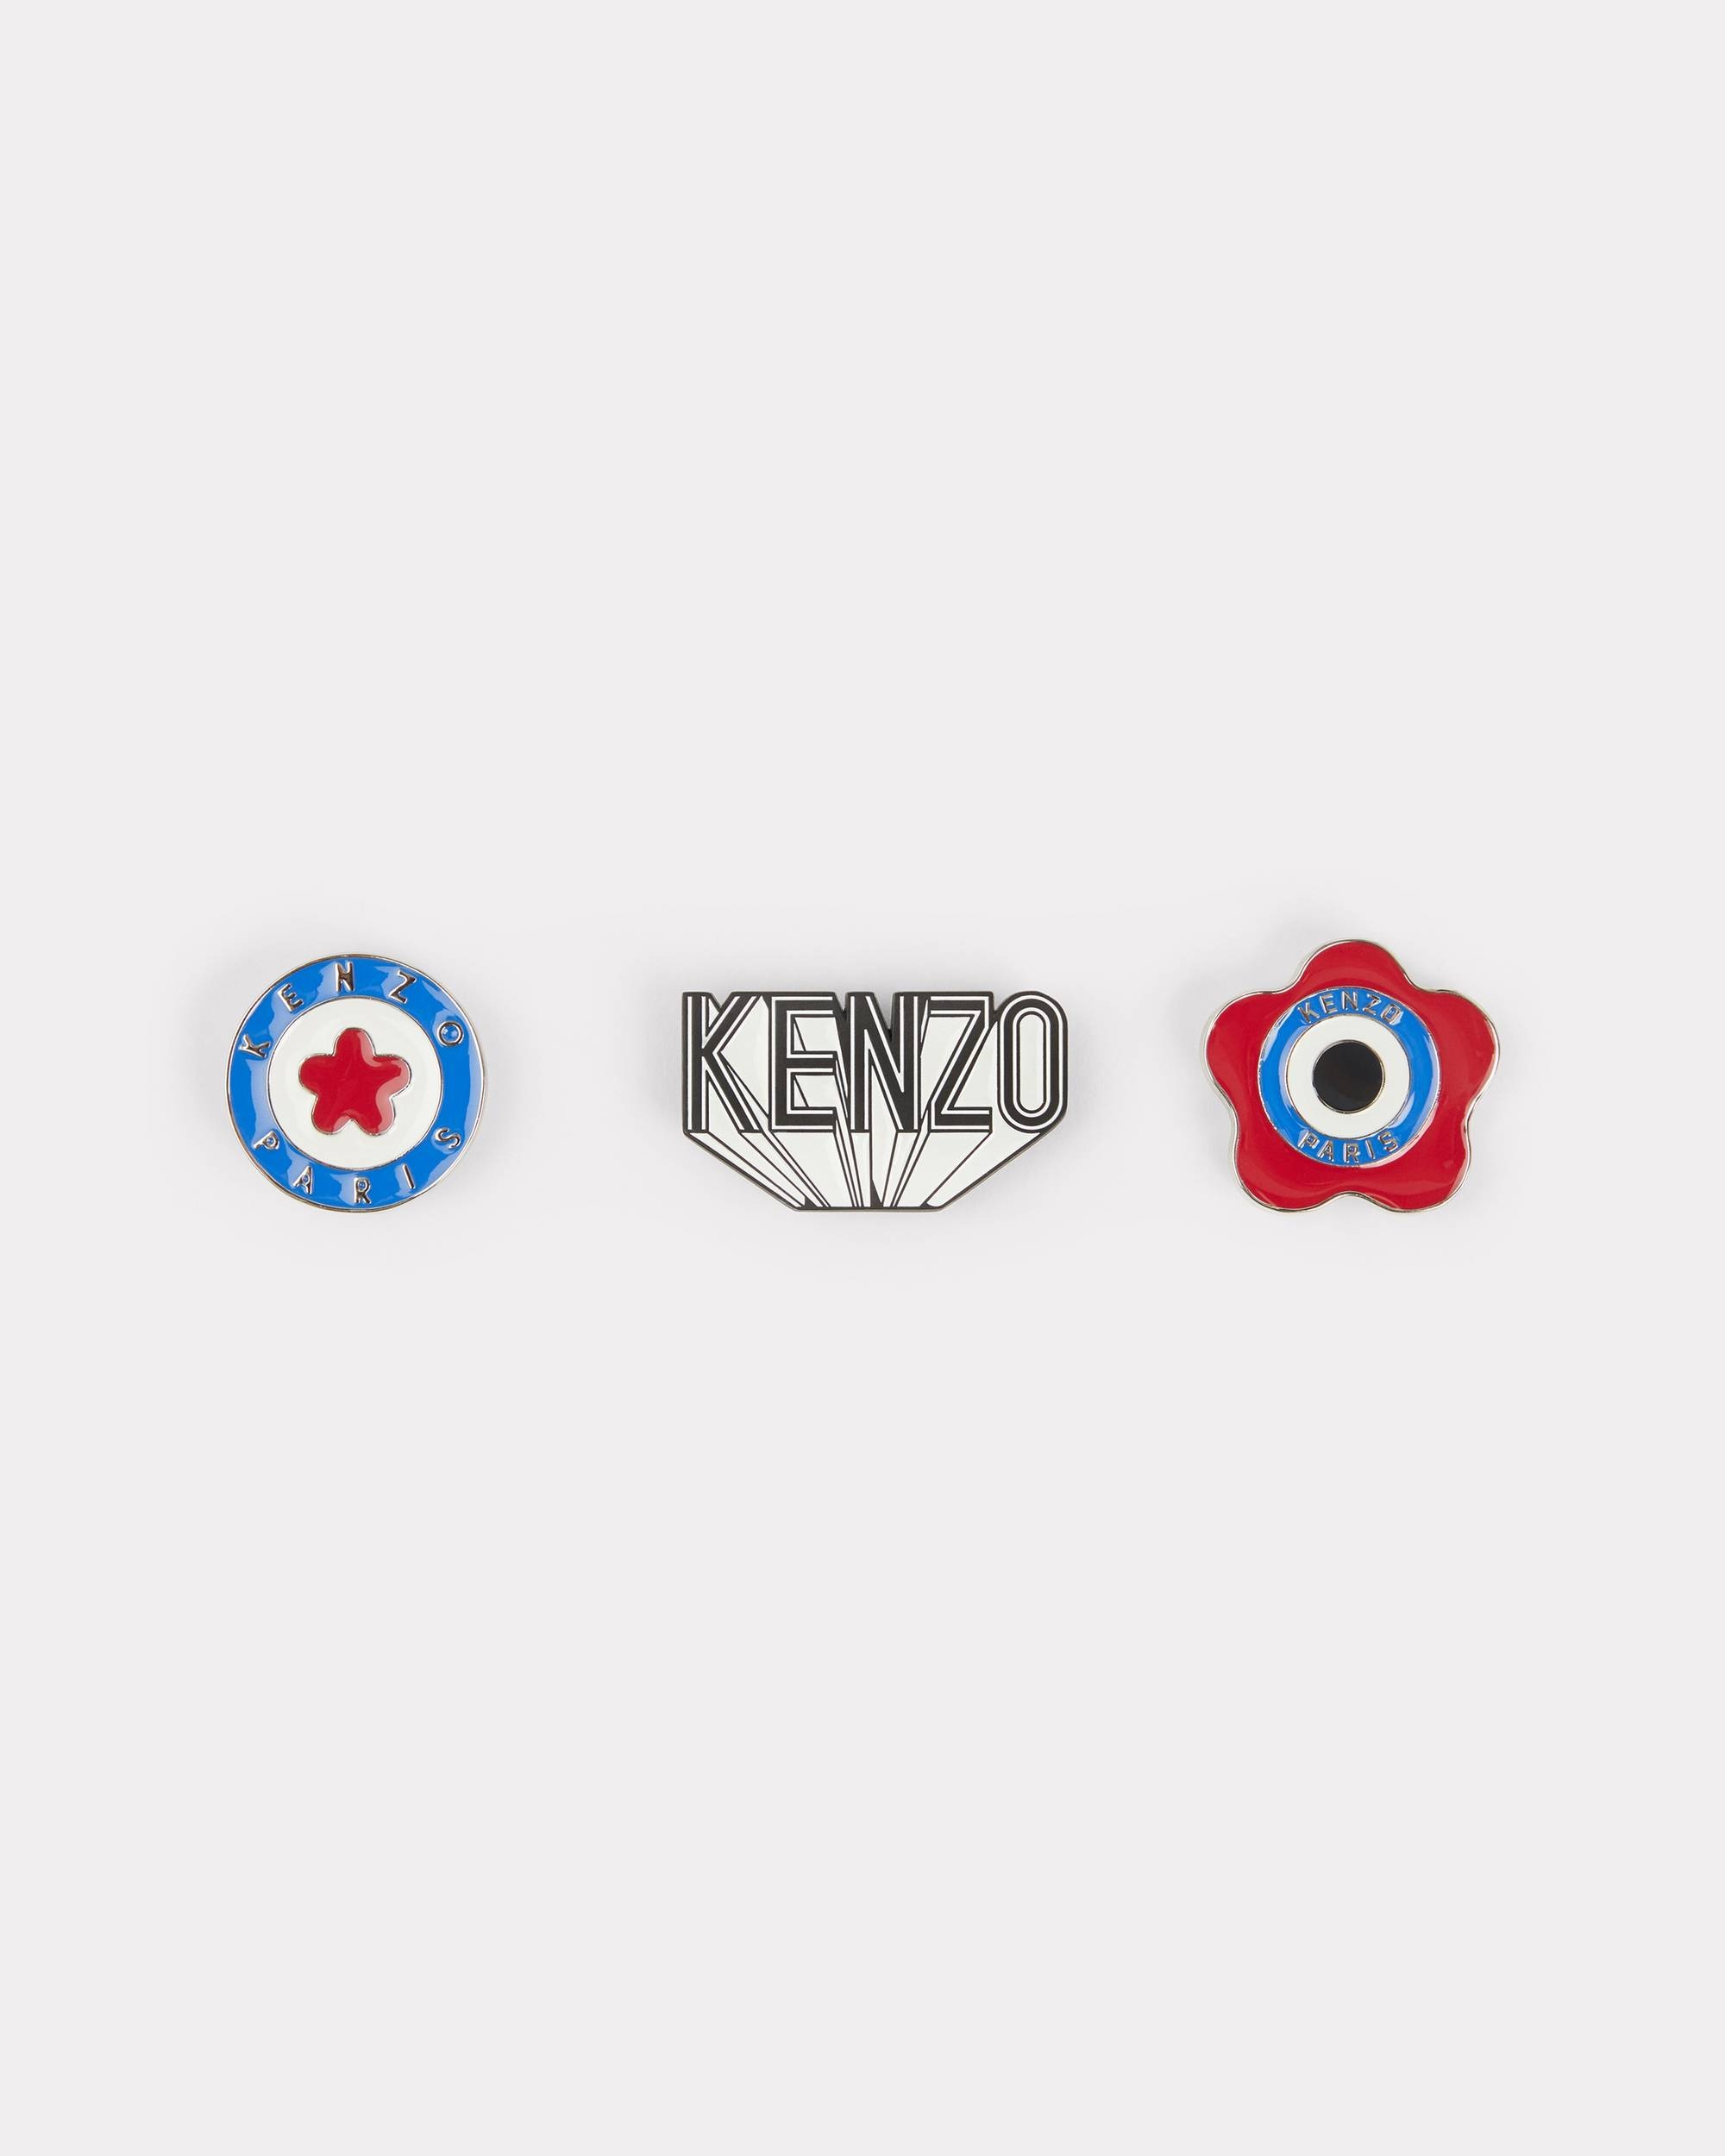 KENZO Stamp set of 3 pins - 2